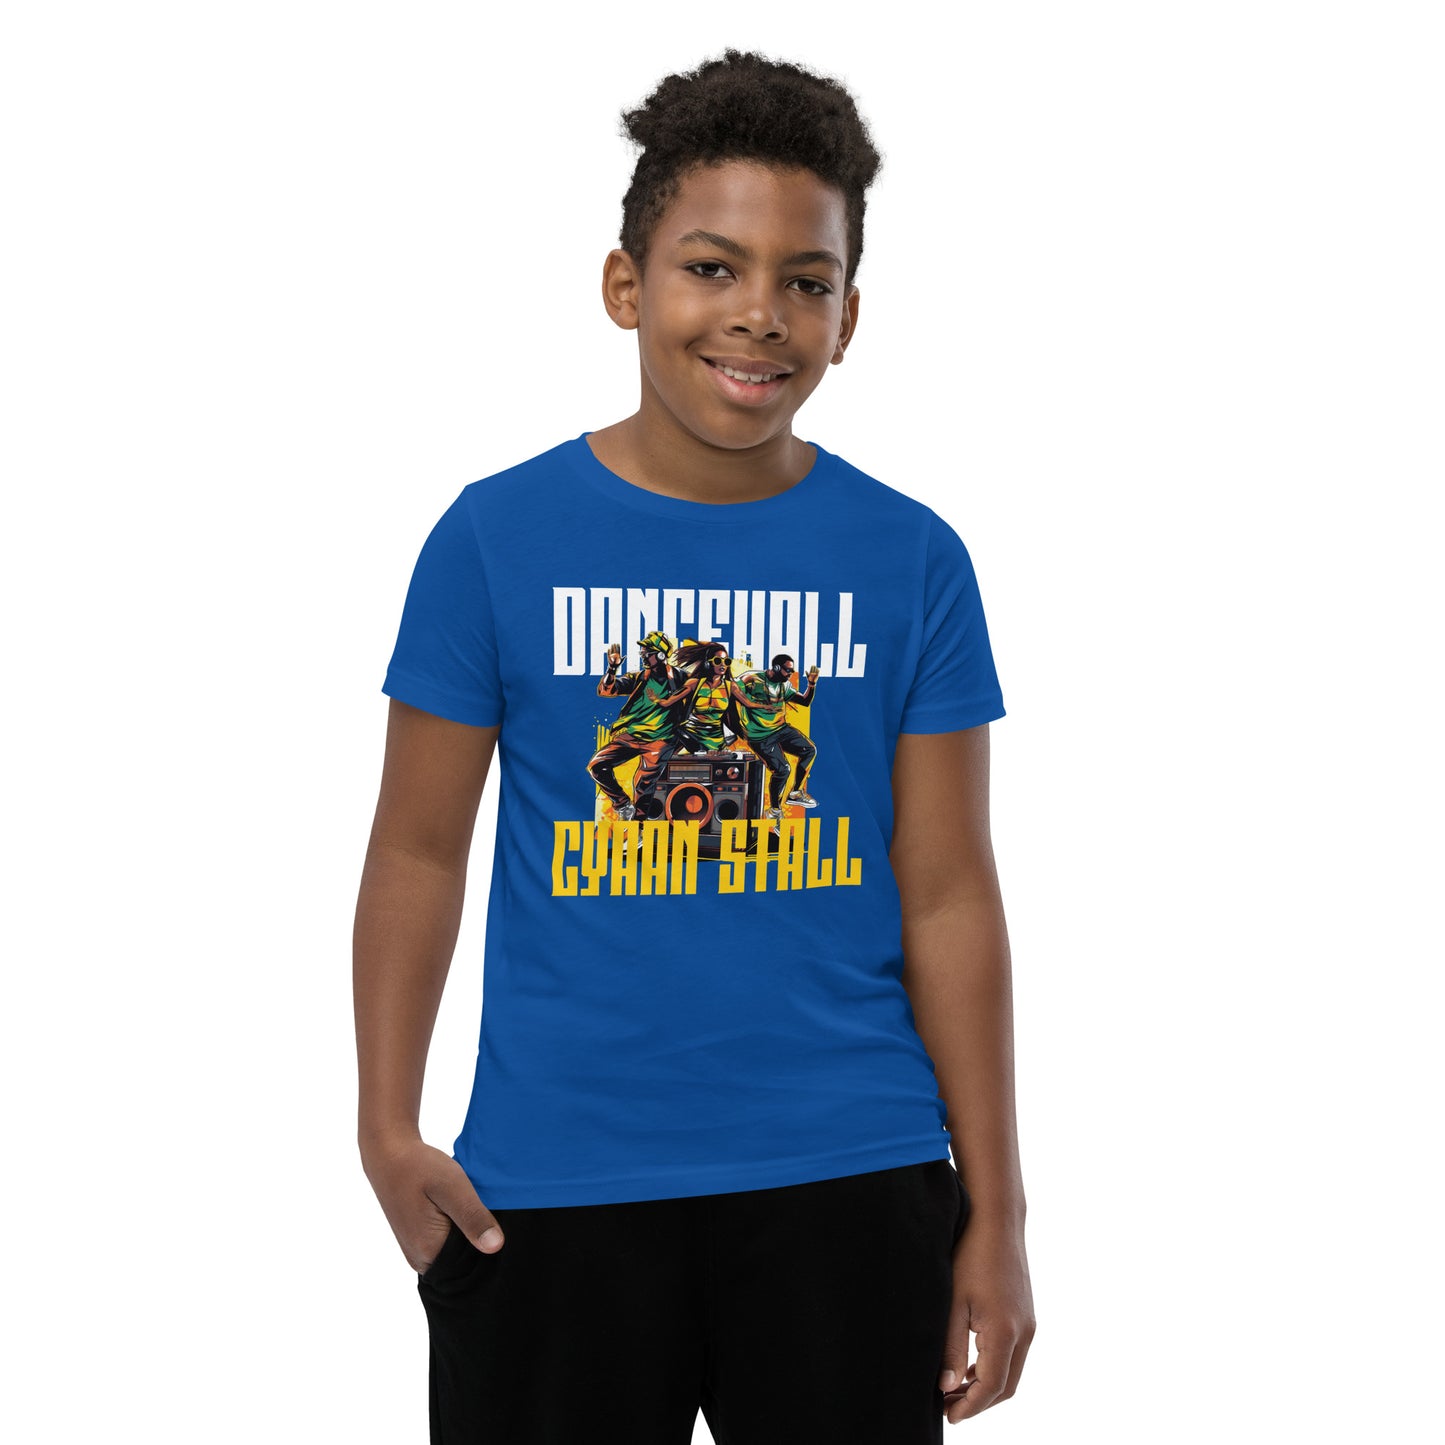 Youth Short Sleeve "Dancehall cyaan stall" T-Shirt